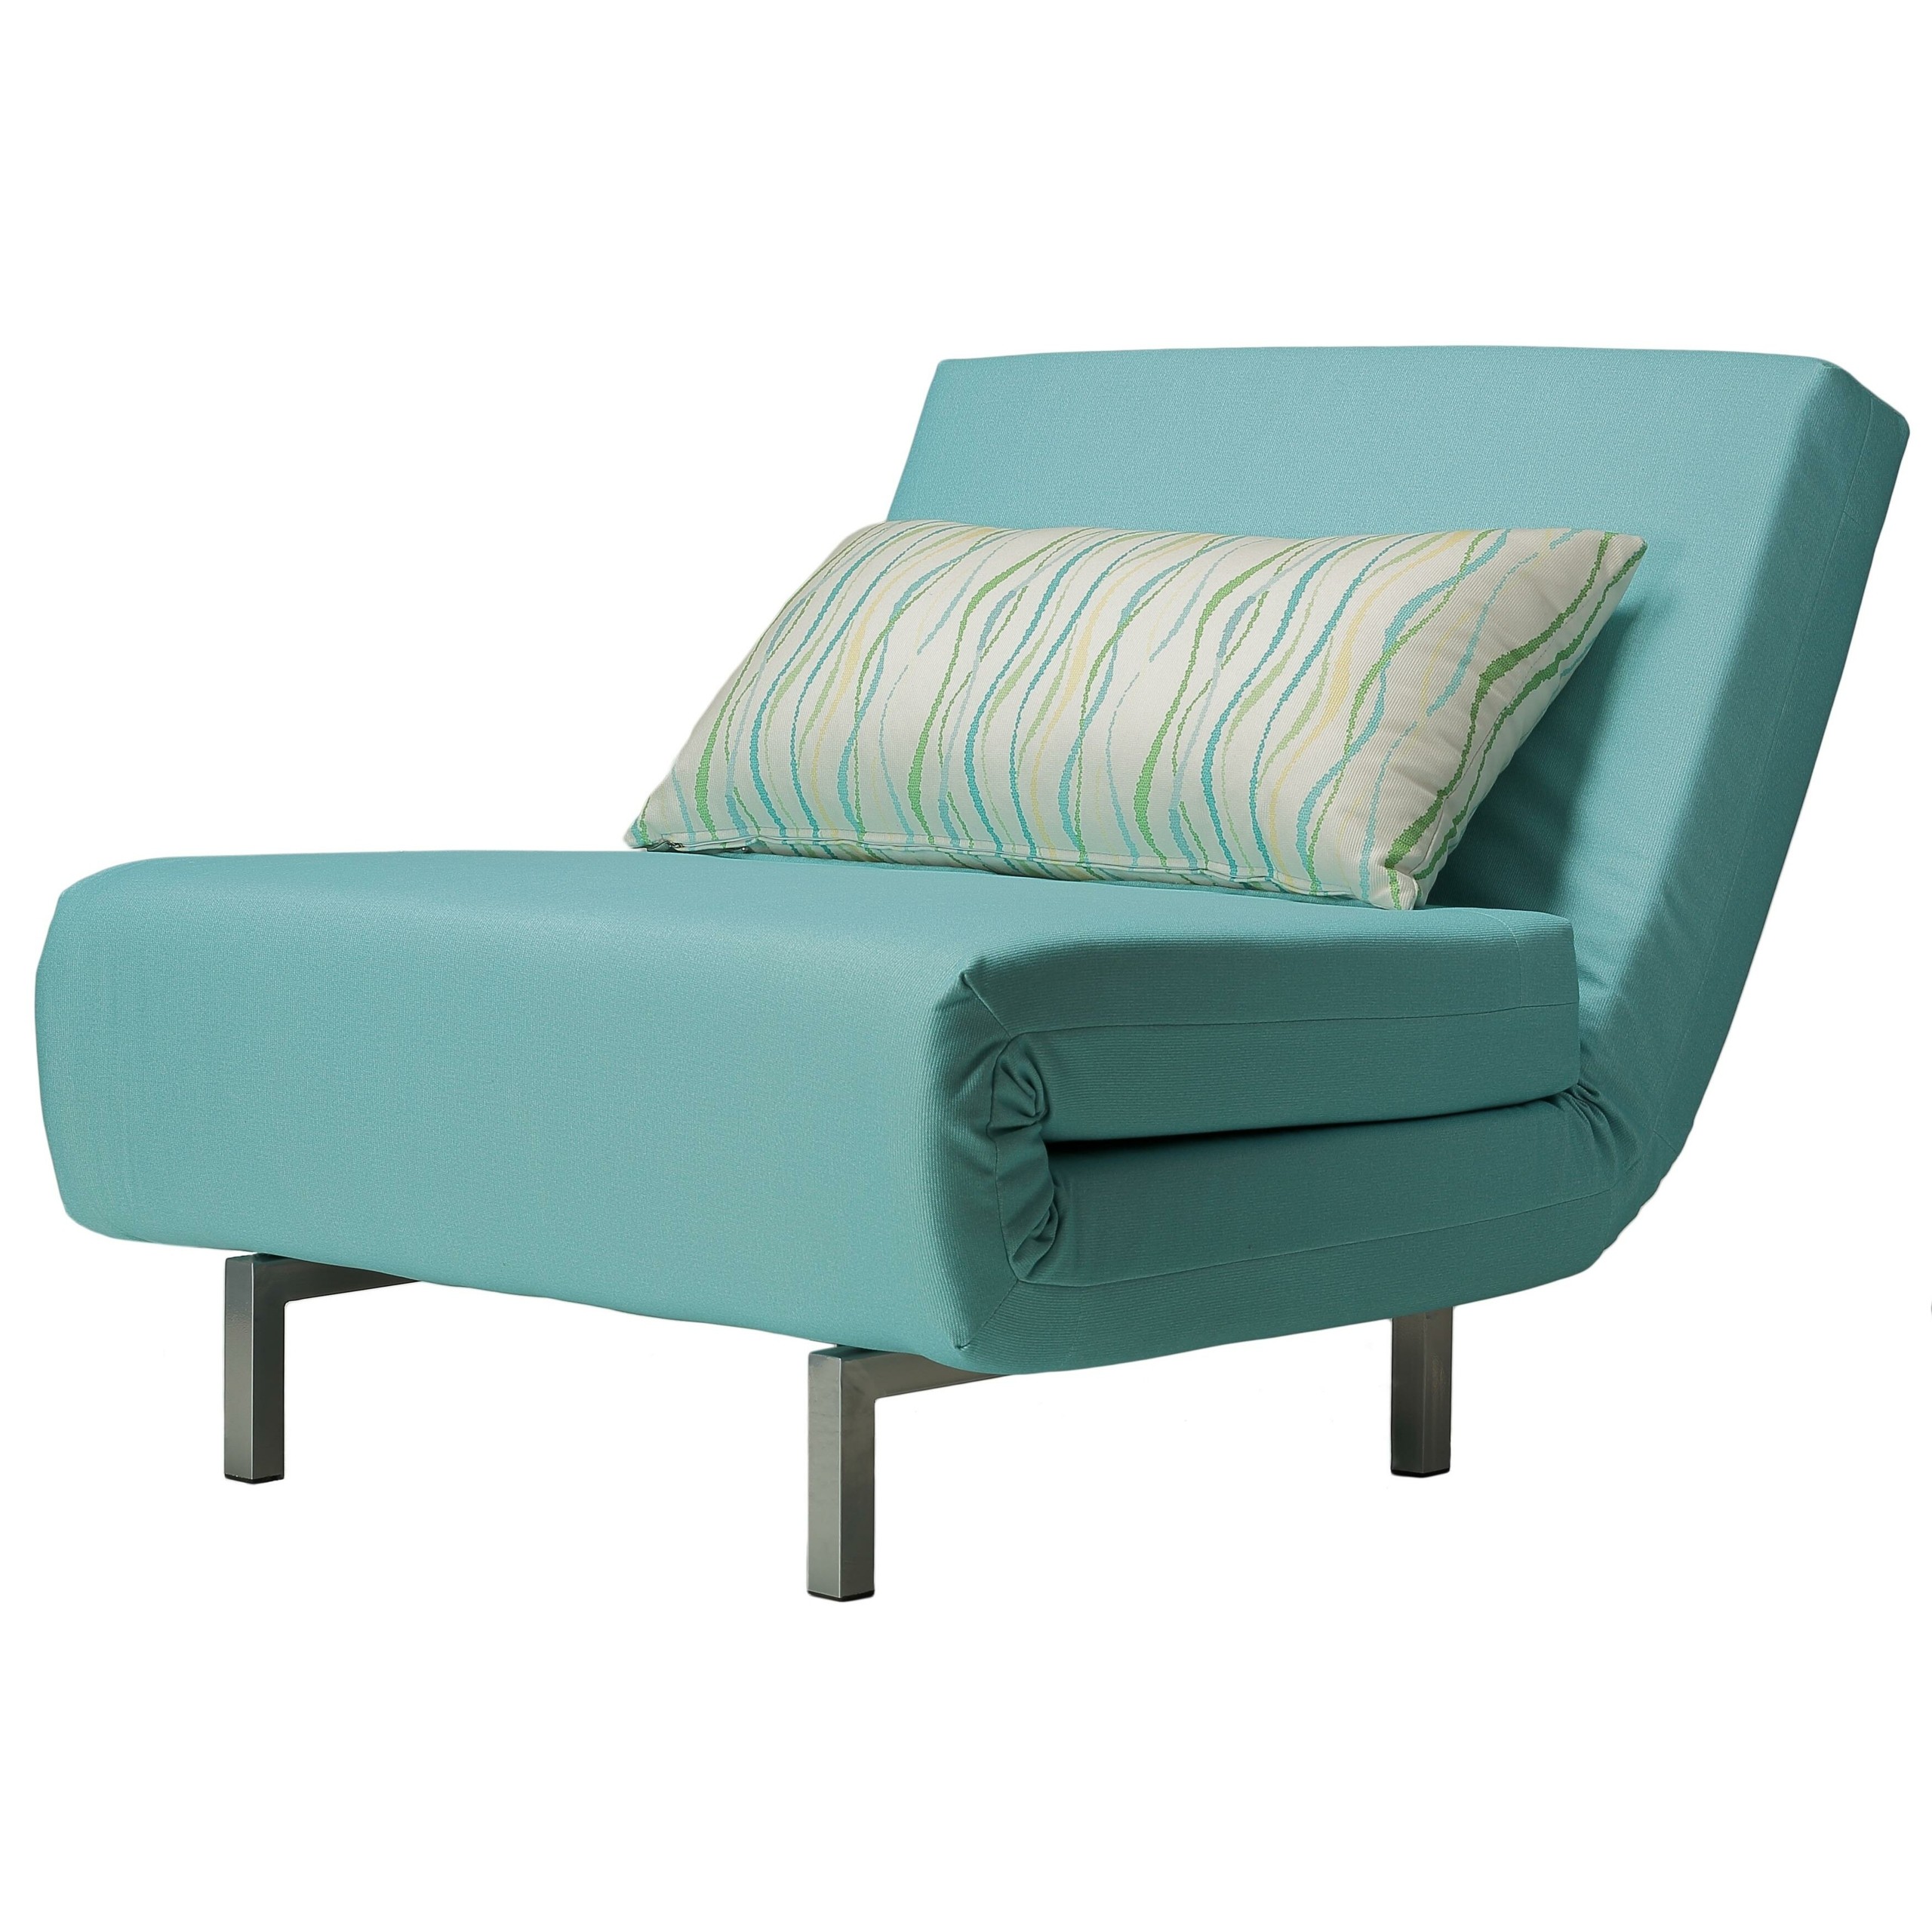 Cortesi Home Savion Aqua Convertible Accent Chair Bed